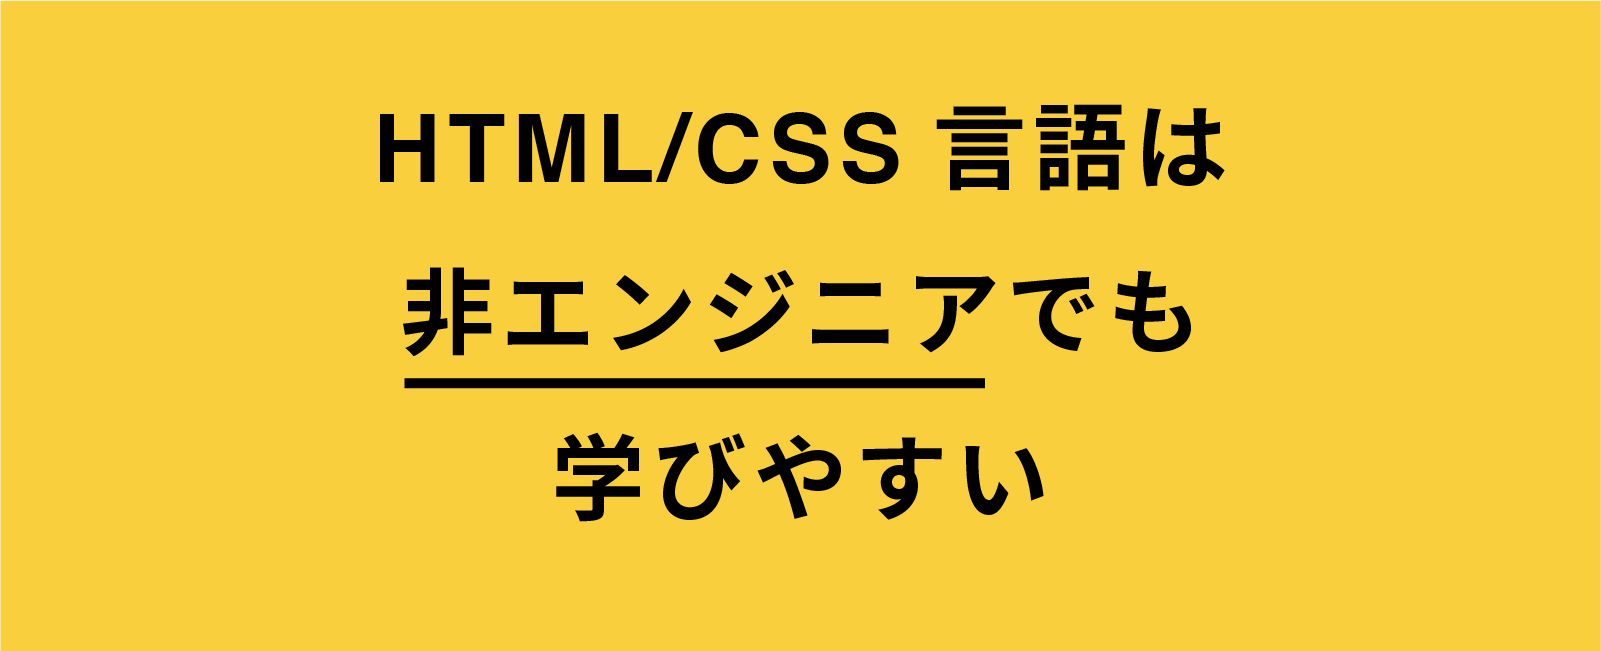 HYML_CSSは非エンジニアでも学びやすい
